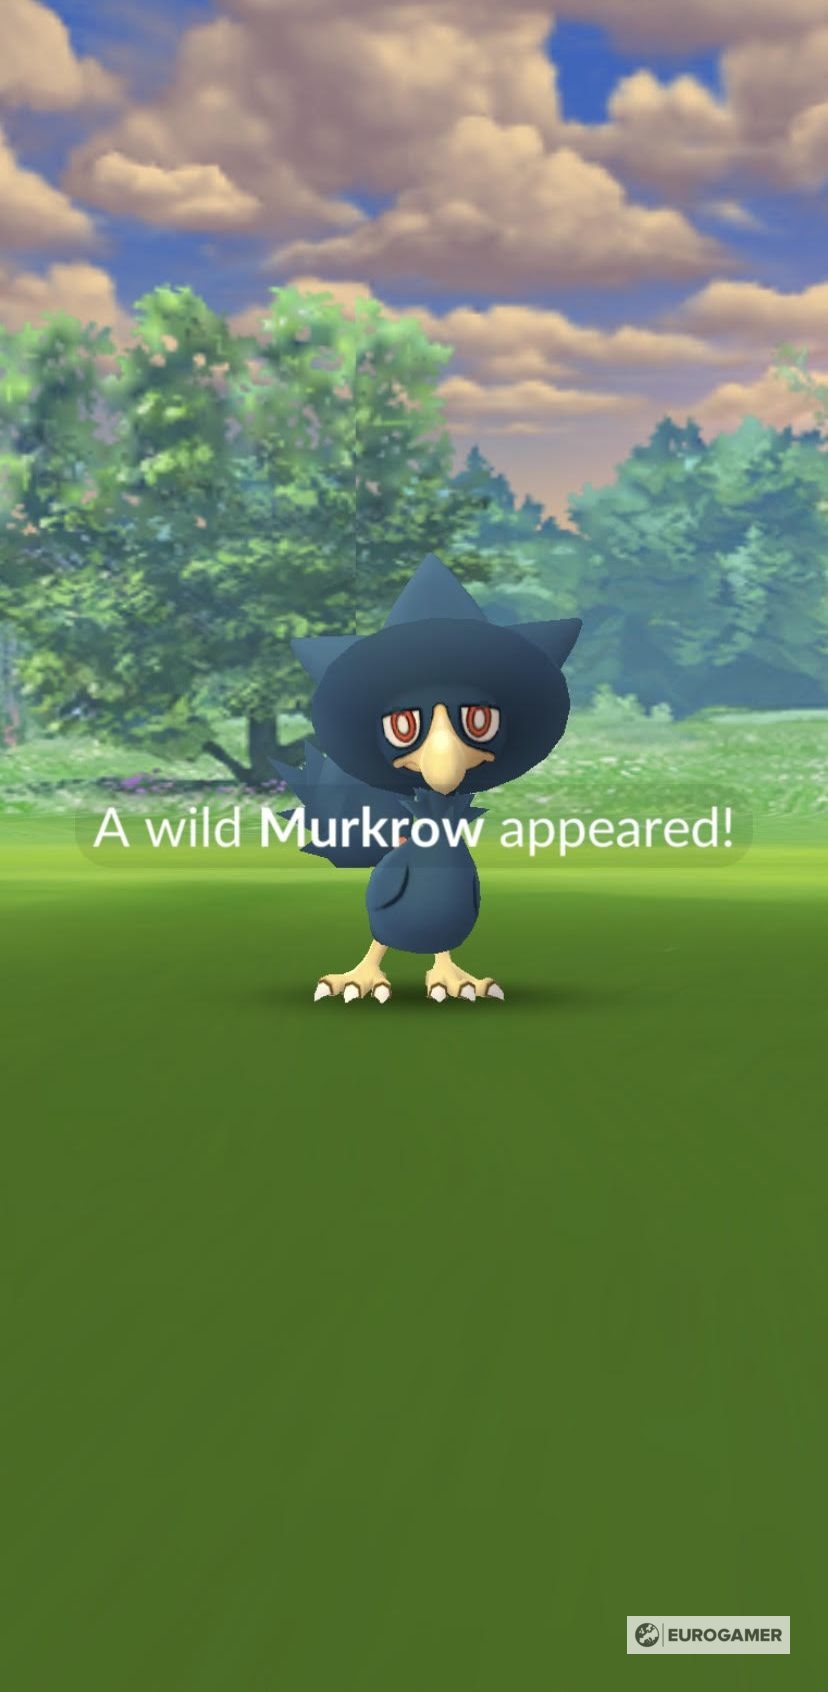 Murkrow 100% perfect IV stats shiny Murkrow in Pokémon Go explained